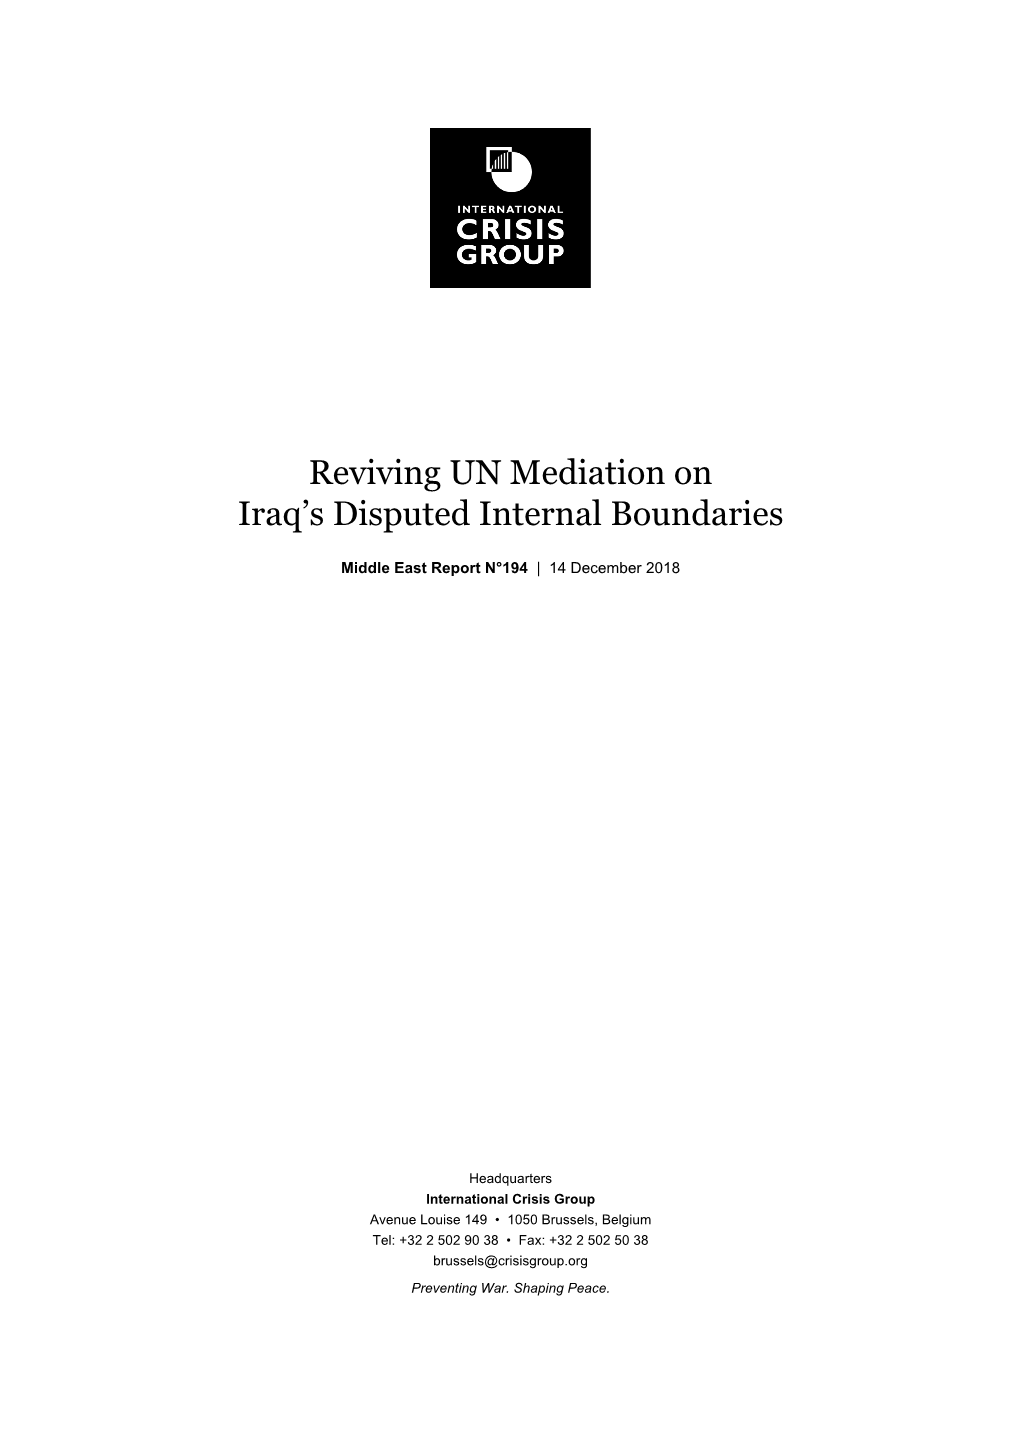 Reviving UN Mediation on Iraq's Disputed Internal Boundaries